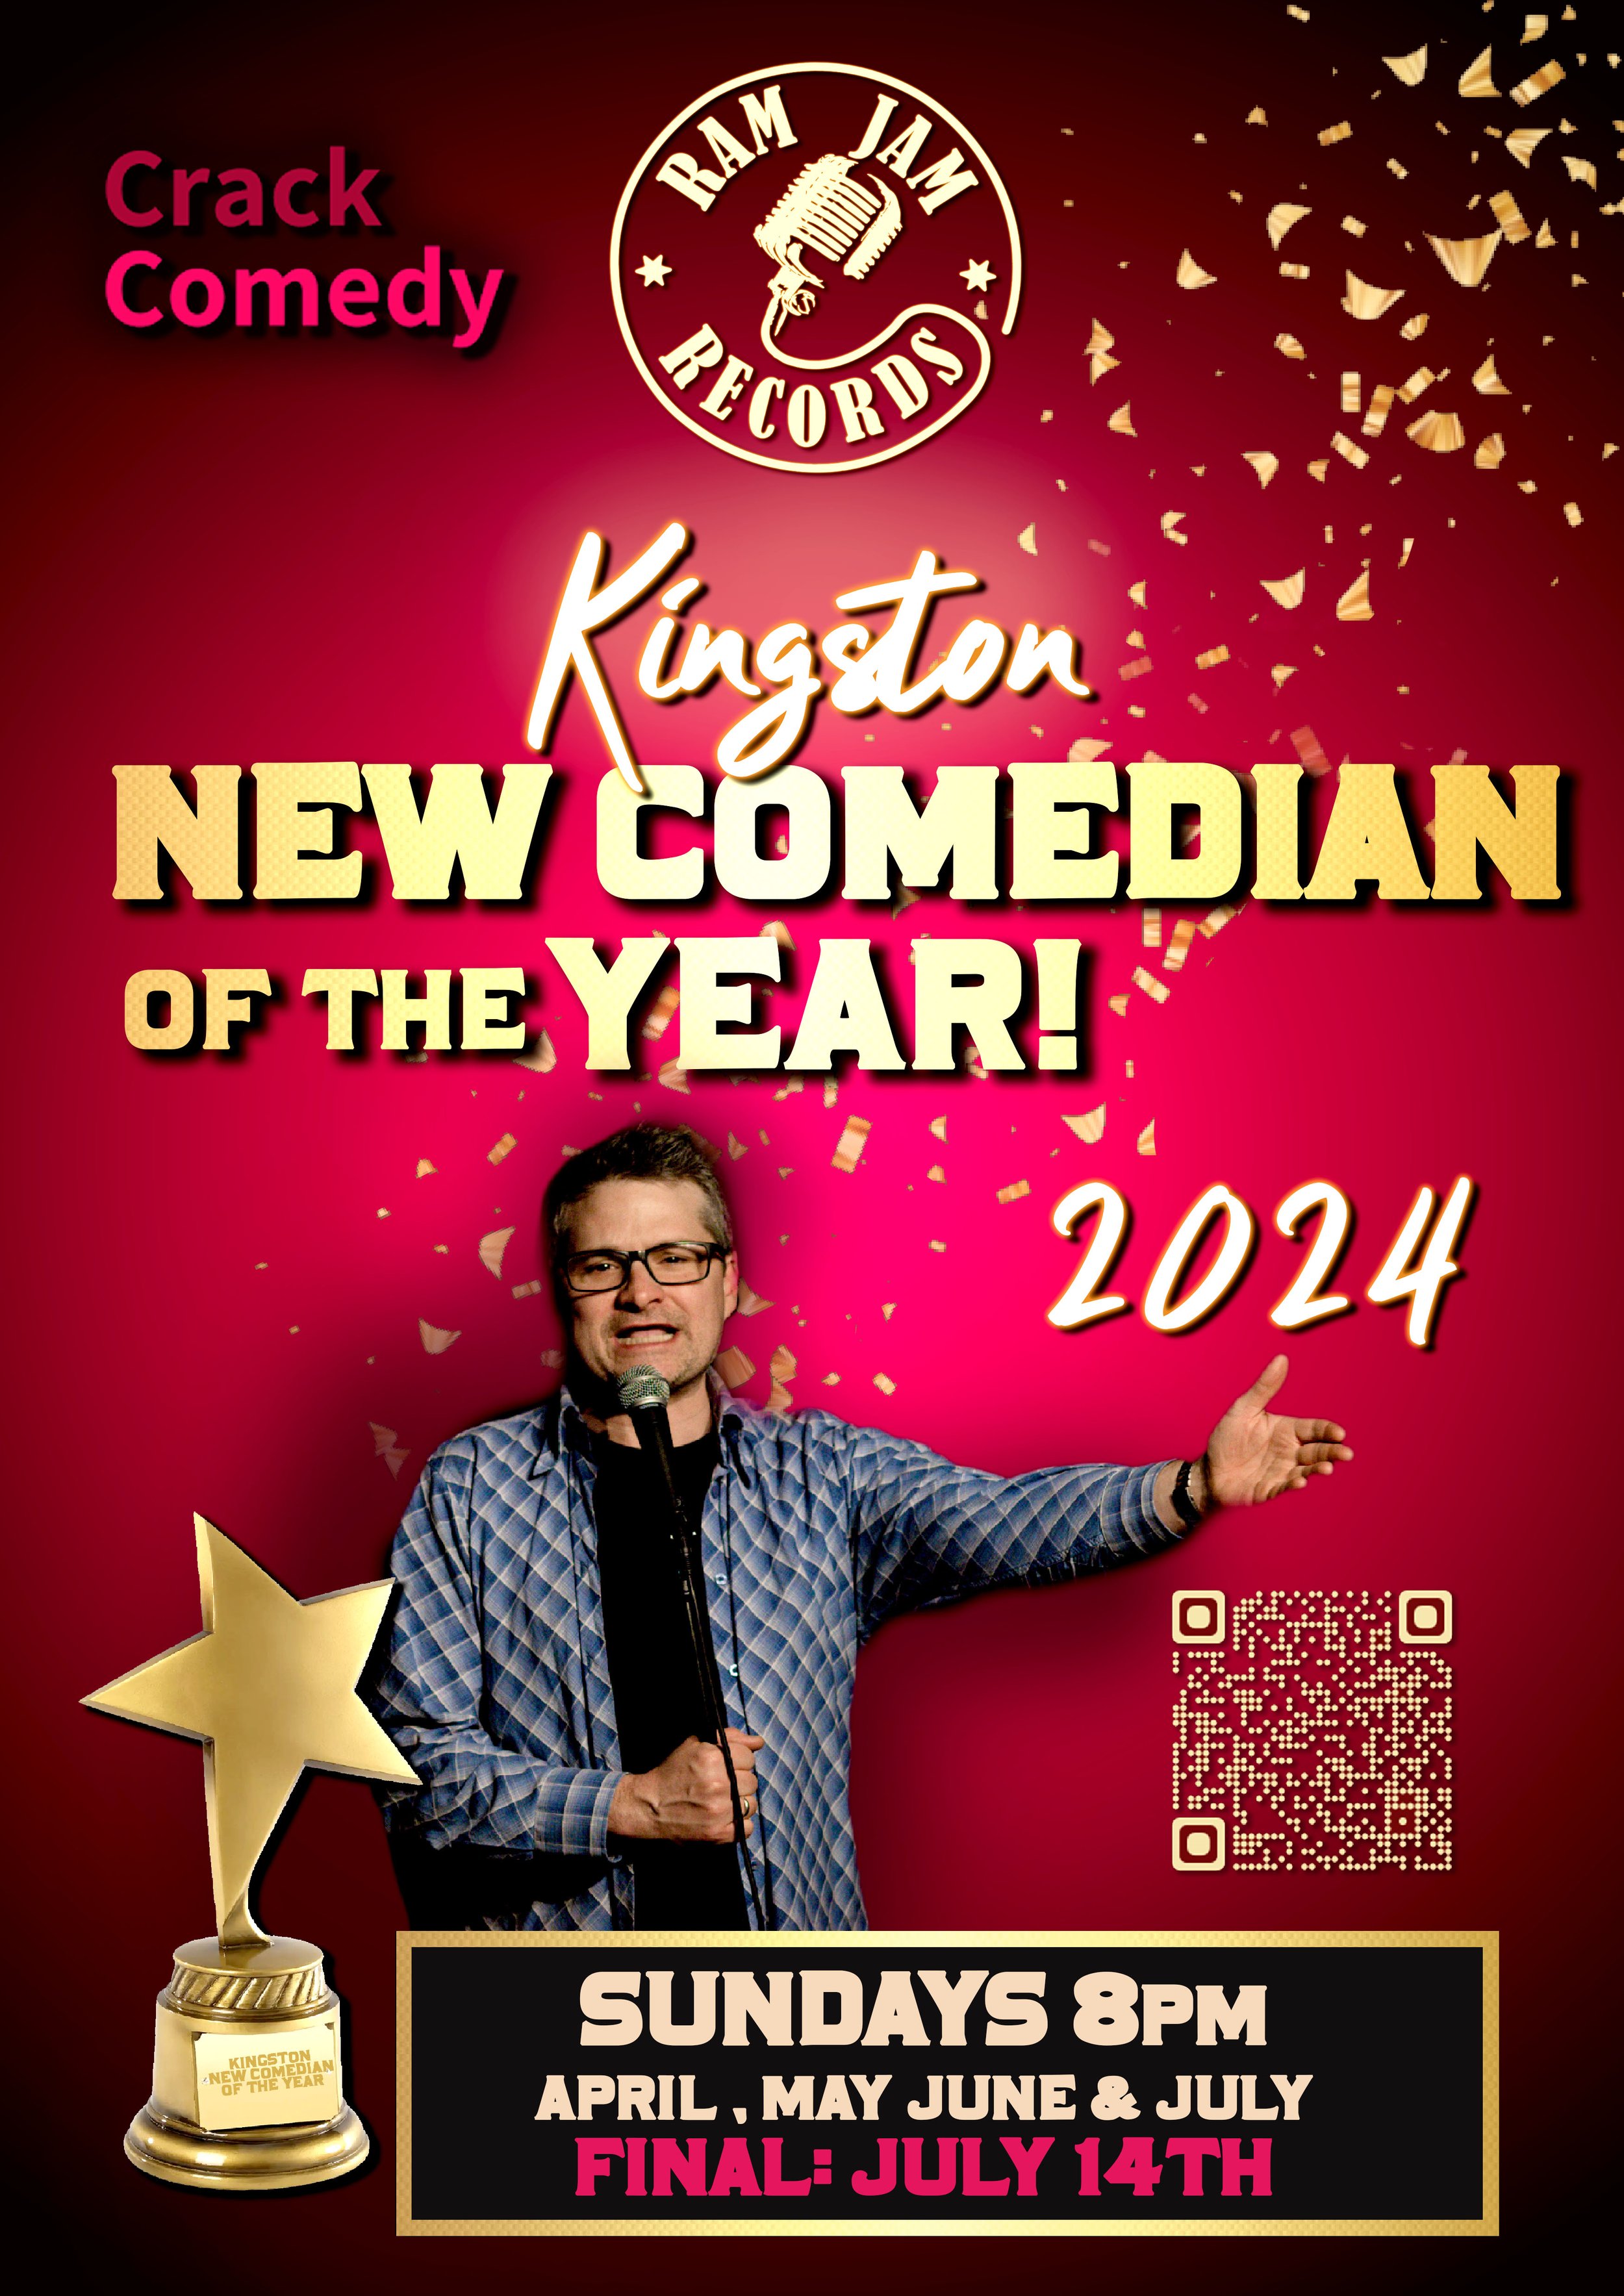 Kingston New Comedian of the Year v2.jpg